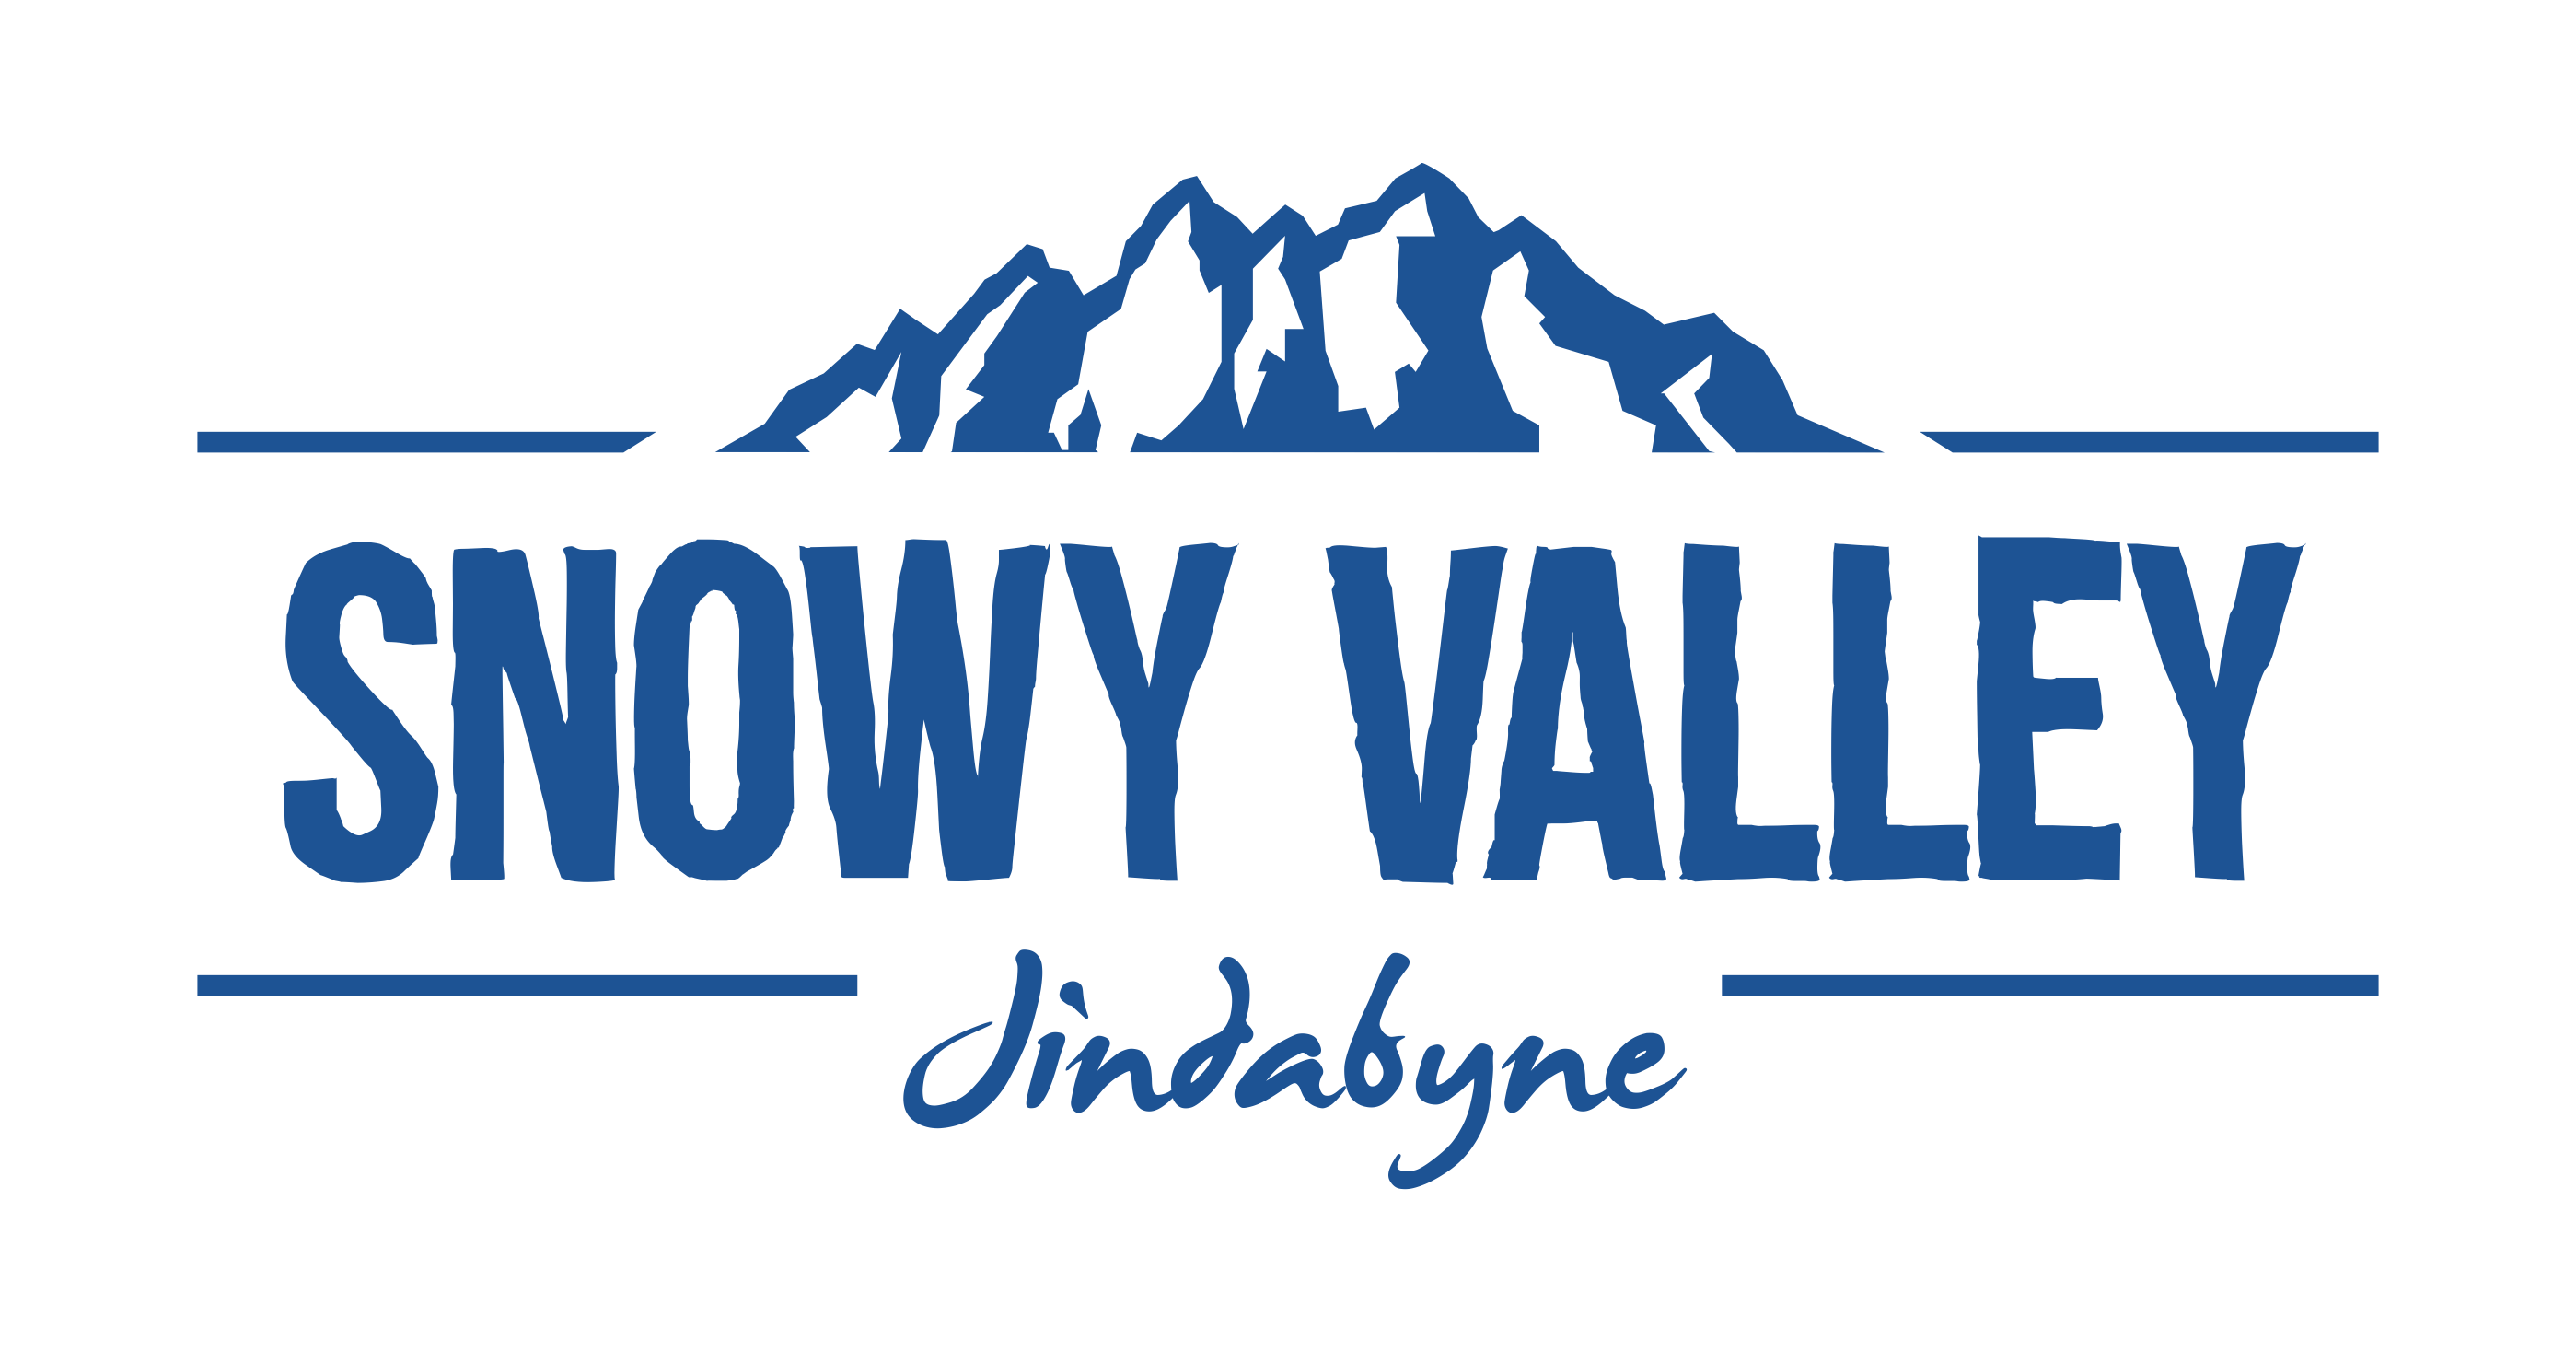 Snowy Valley Jindabyne